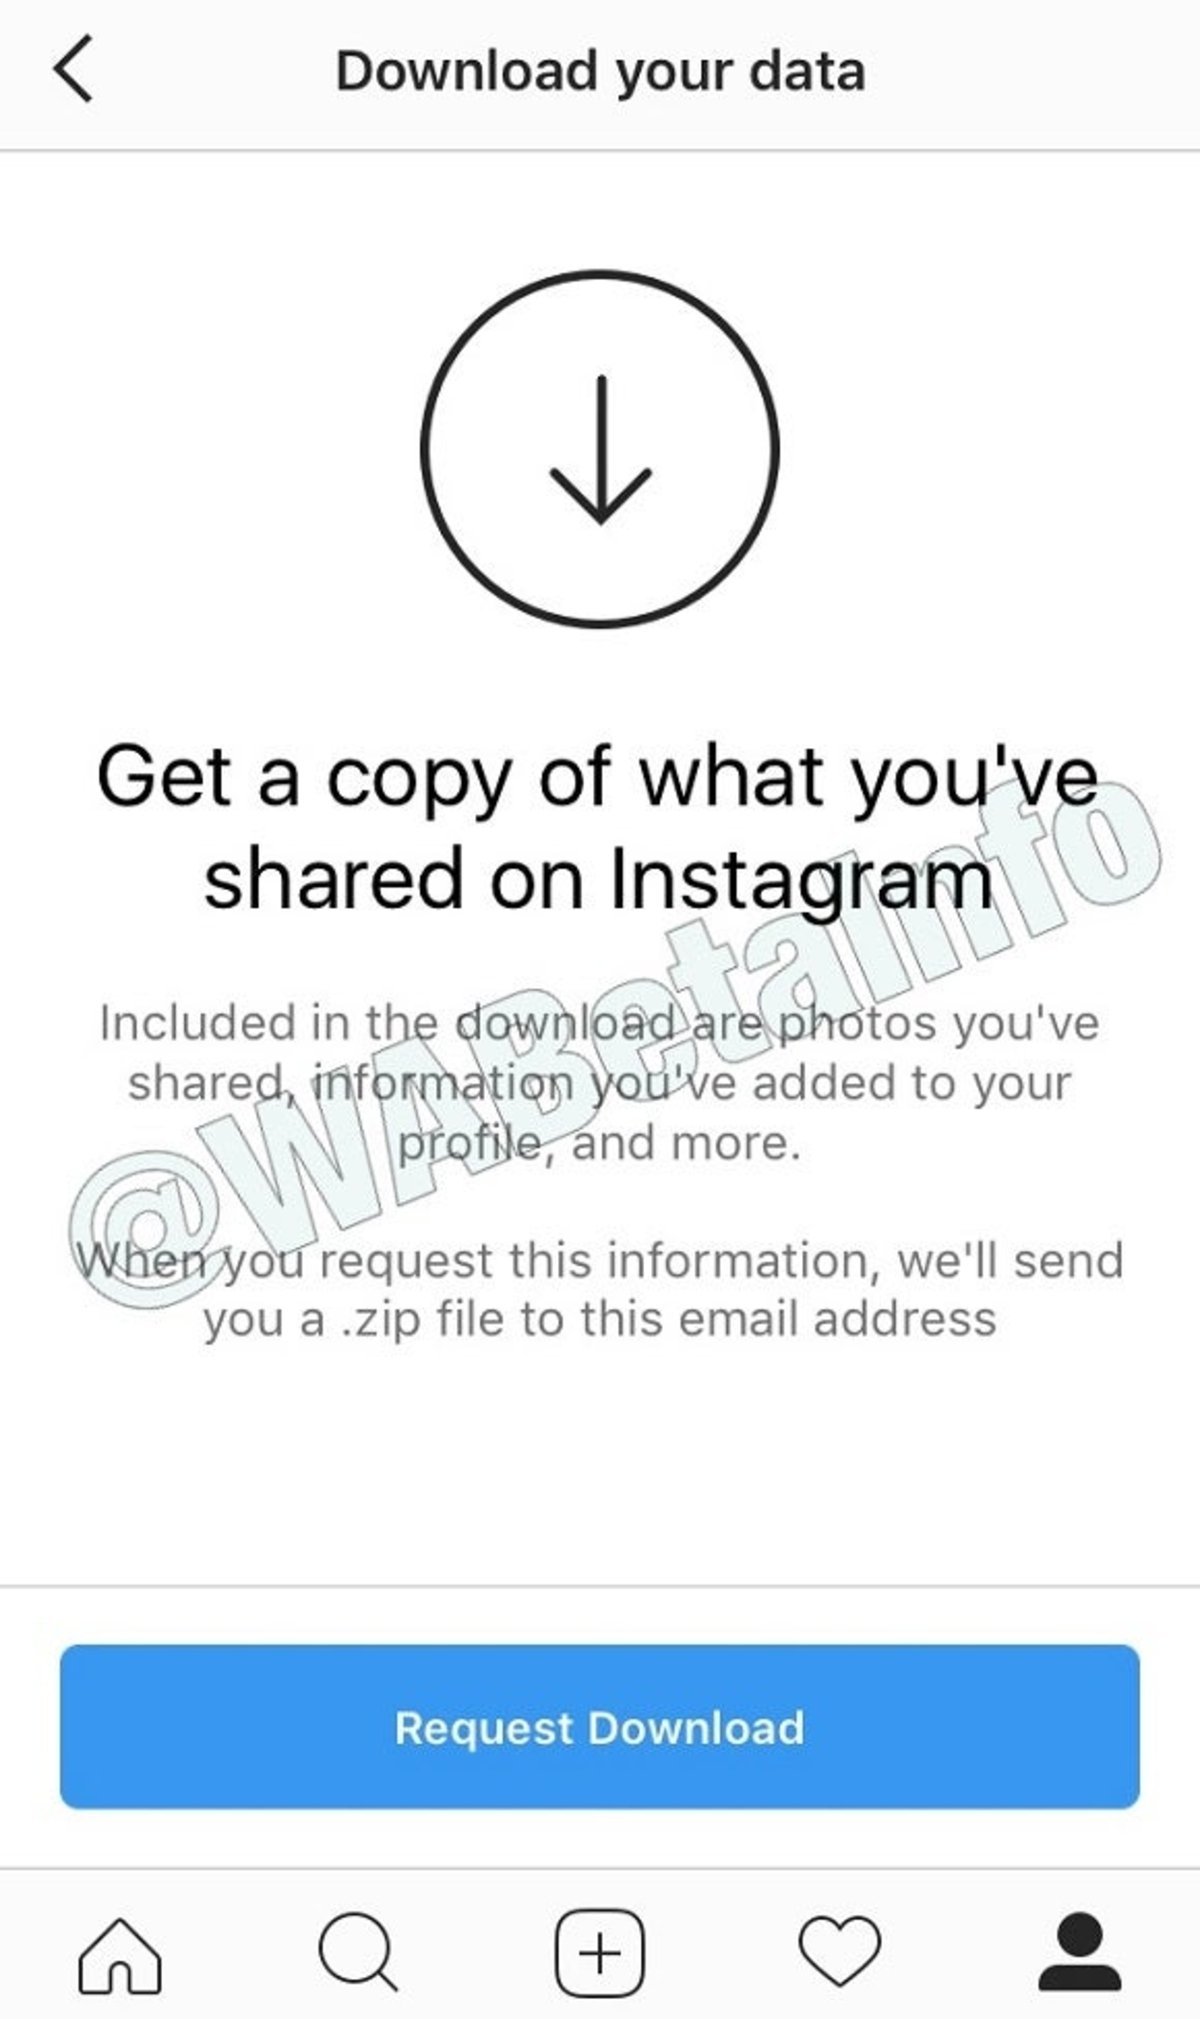 descargar-datos-instagram